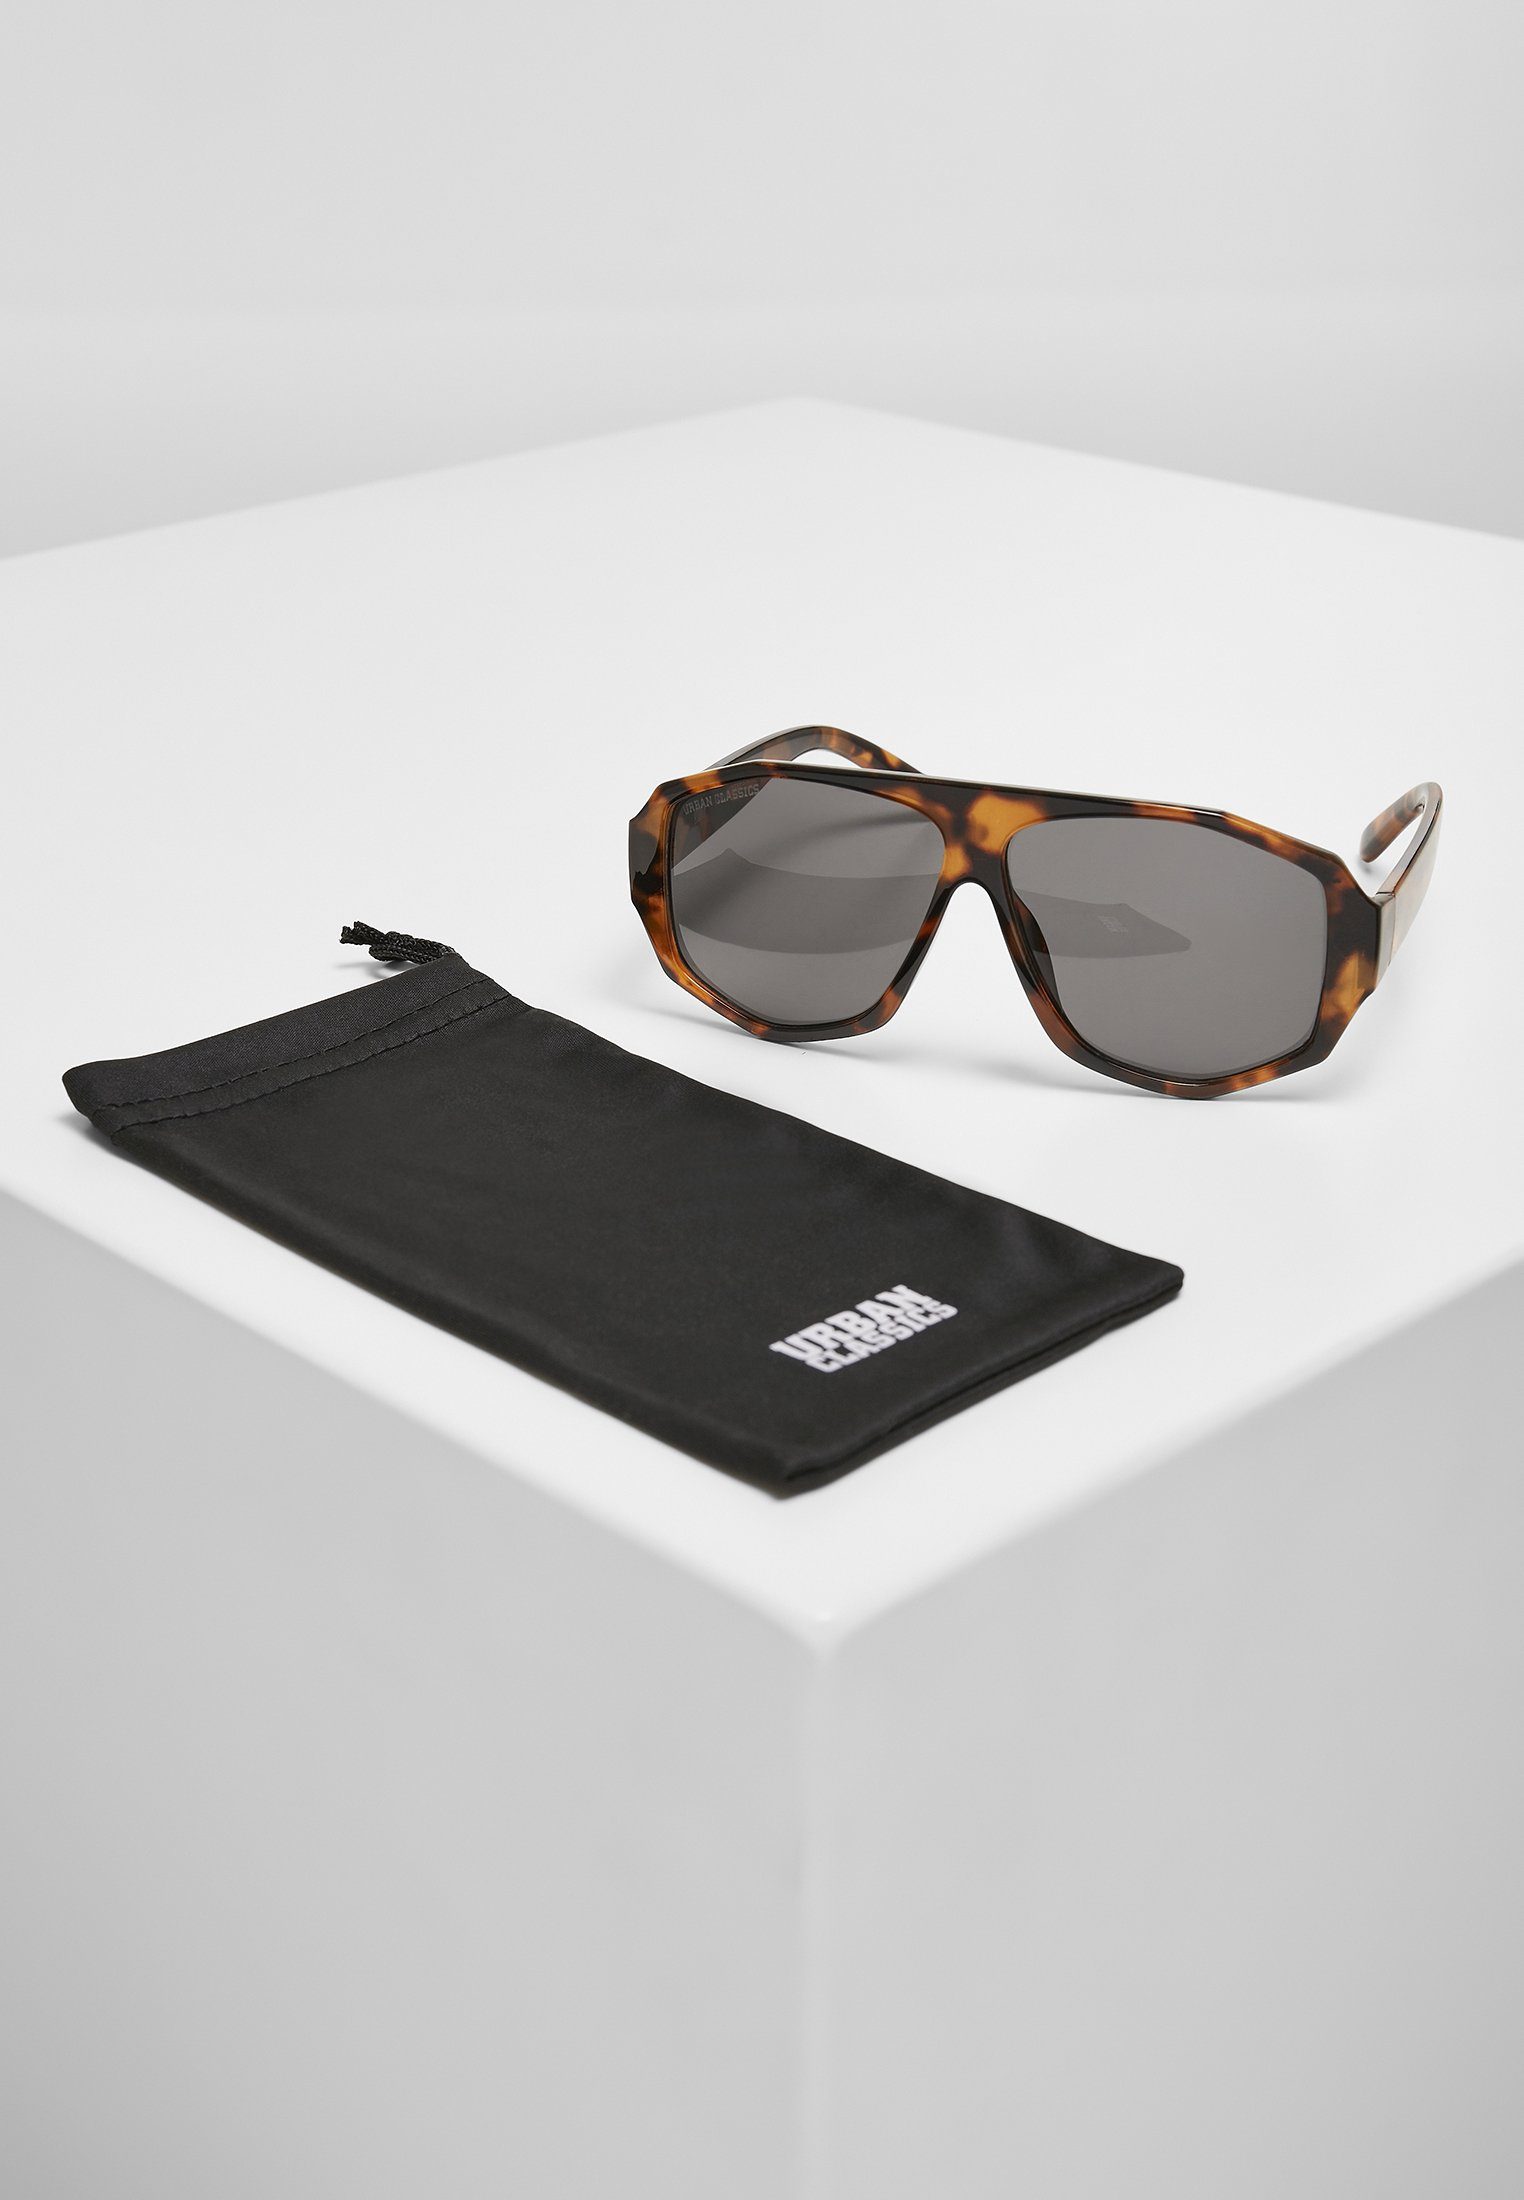 Sonnenbrille leo/black brown Sunglasses 101 CLASSICS Accessoires URBAN UC